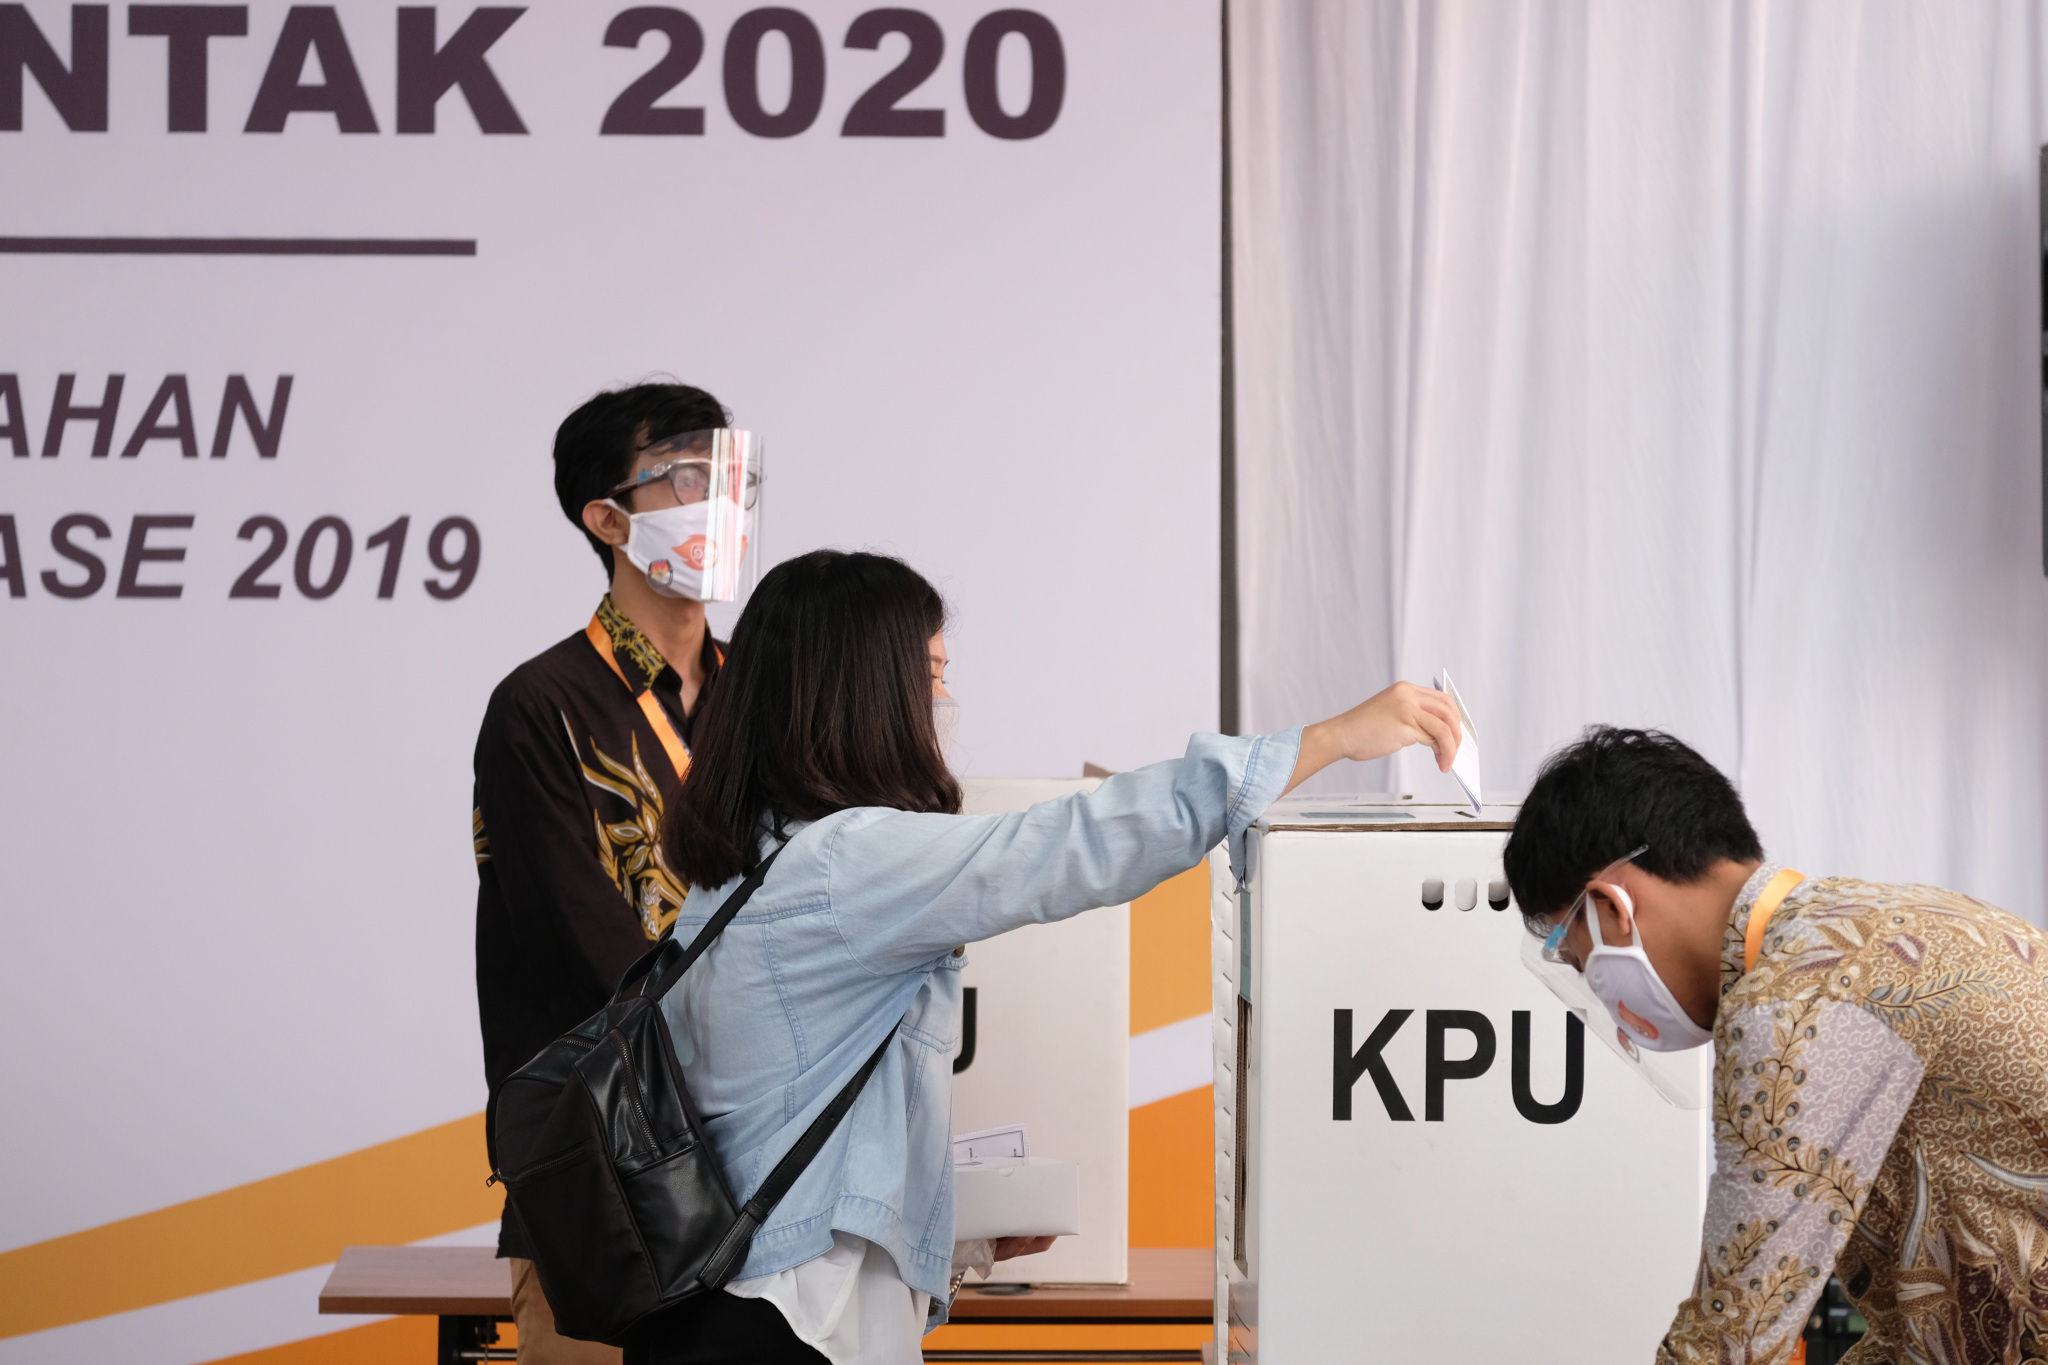 <p>Pegawai Komisi Pemilihan Umum (KPU) mengikuti simulasi pemungutan suara pemilihan serentak 2020 di Jakarta, Rabu, 22 Juli 2020. Simulasi tersebut digelar untuk memberikan edukasi kepada masyarakat terkait proses pemungutan dan penghitungan suara Pilkada serentak 2020 yang akan dilaksanakan pada 9 Desember 2020 dengan menerapkan protokol kesehatan COVID-19. Foto: Ismail Pohan/TrenAsia</p>
